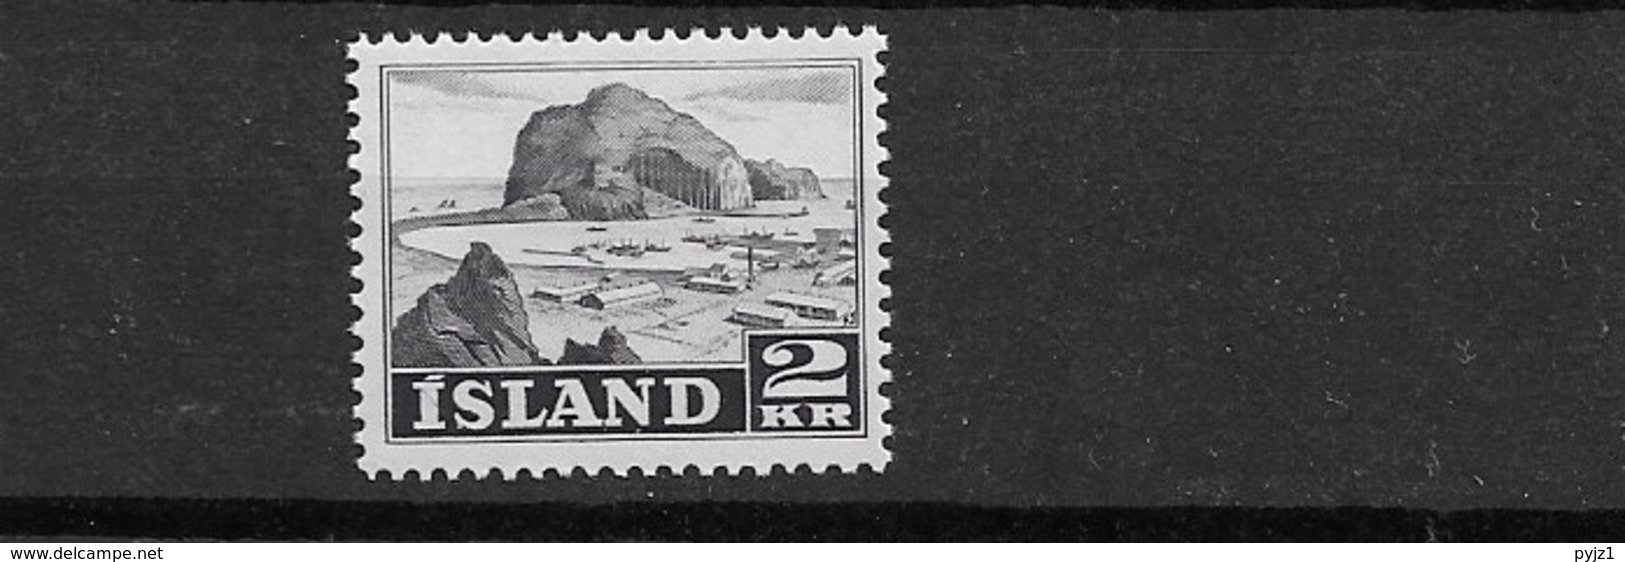 1950 MNH Iceland, Island, Mi 269 - Ongebruikt